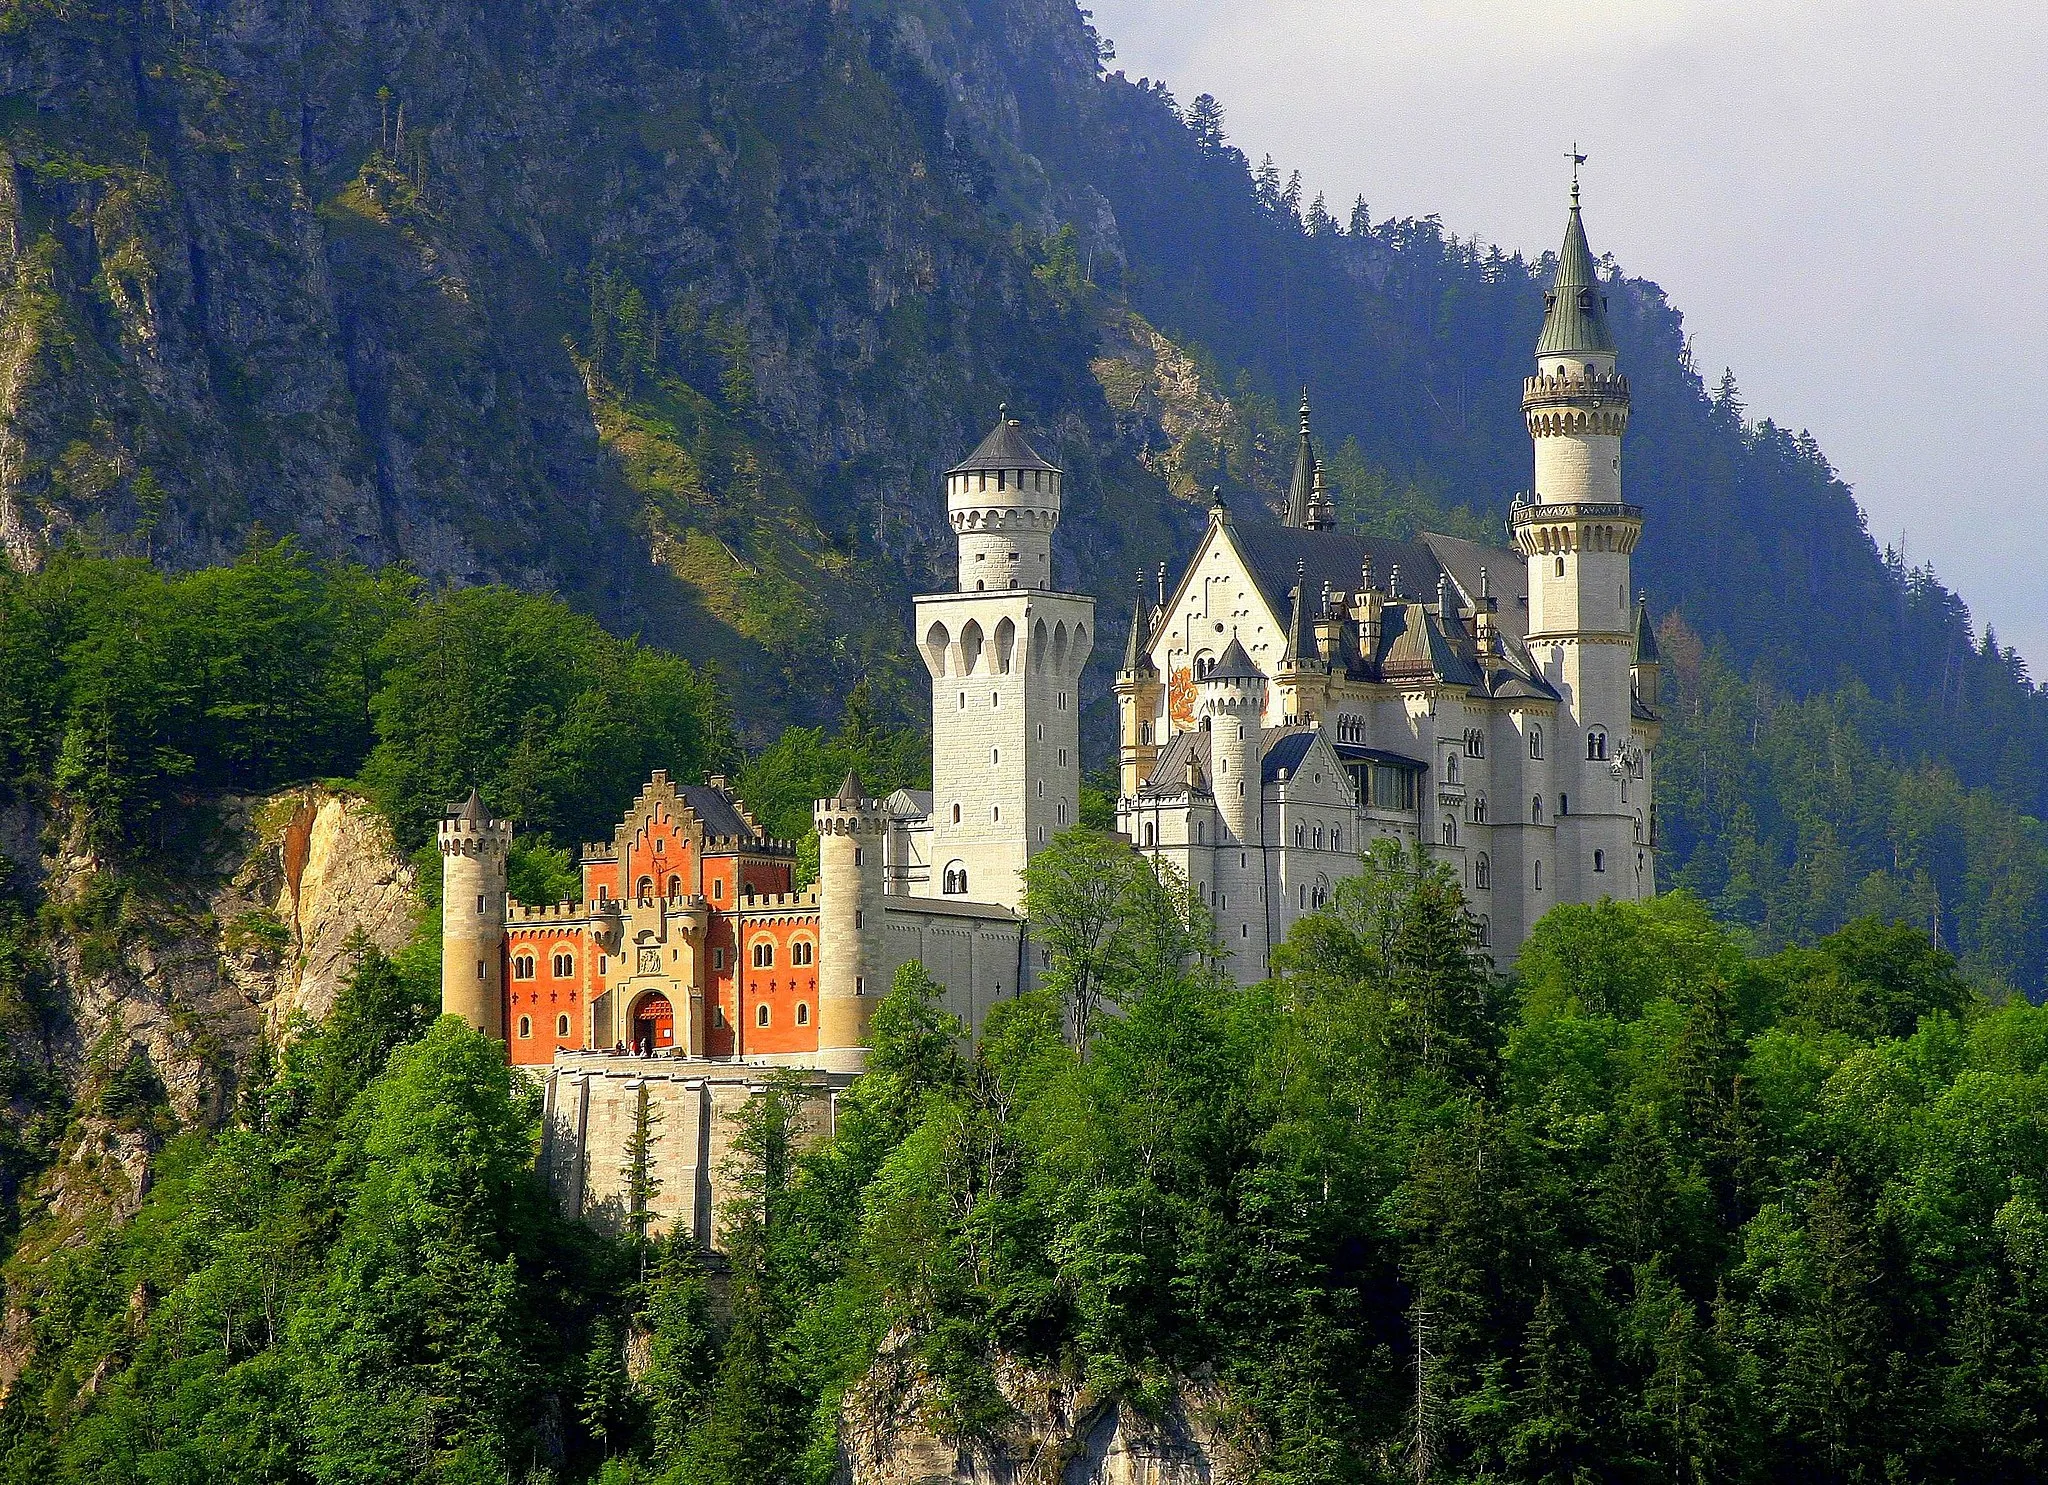 Photo showing: Neuschwanstein Castle is a famous German castle in Schwangau, Bavaria, built by King Ludwig II of Bavaria